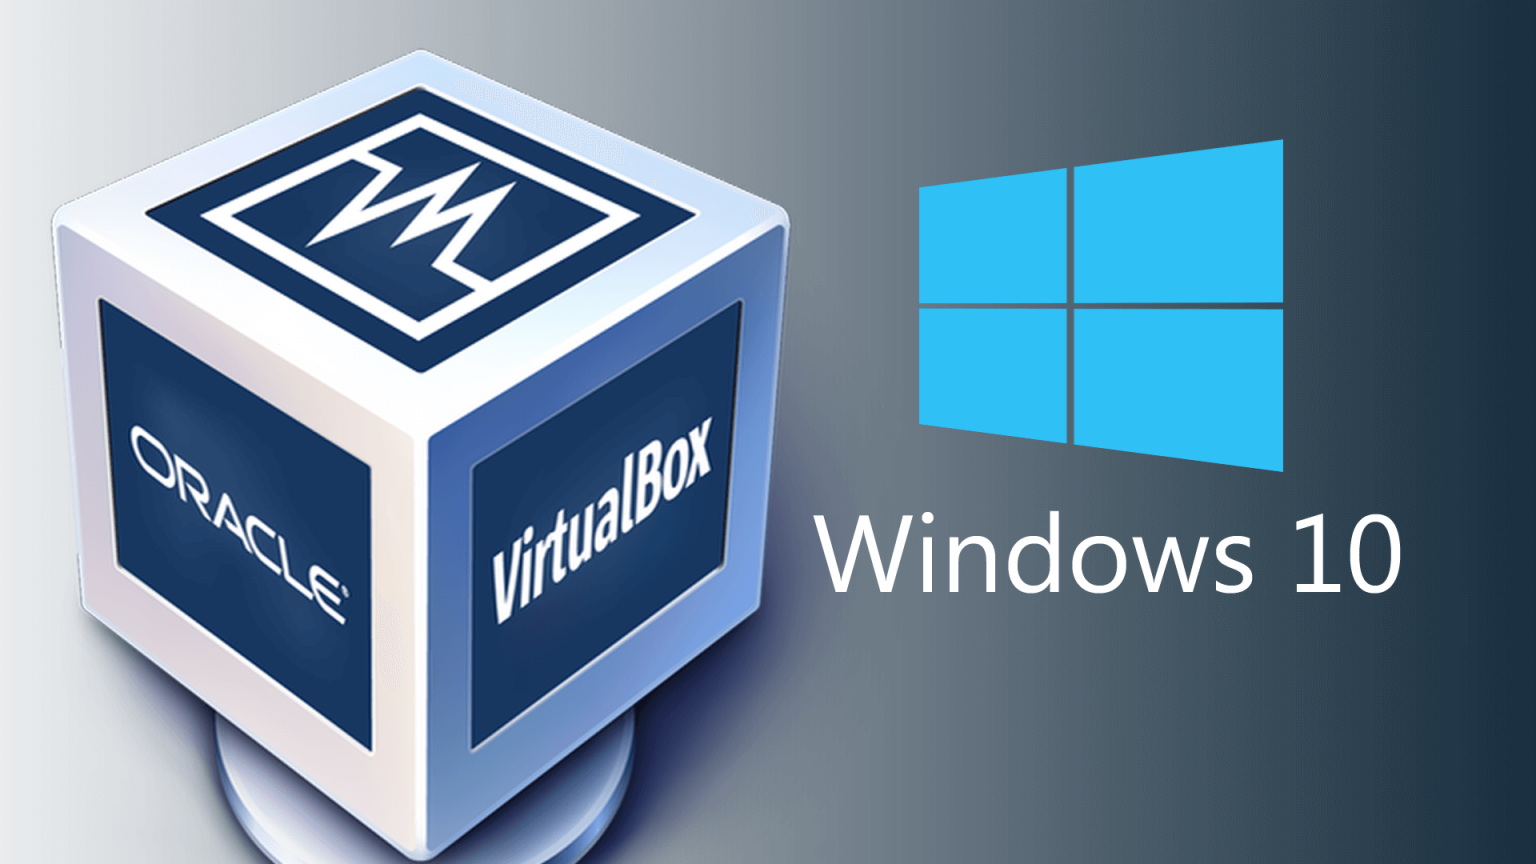 Oracle virtualbox windows 10